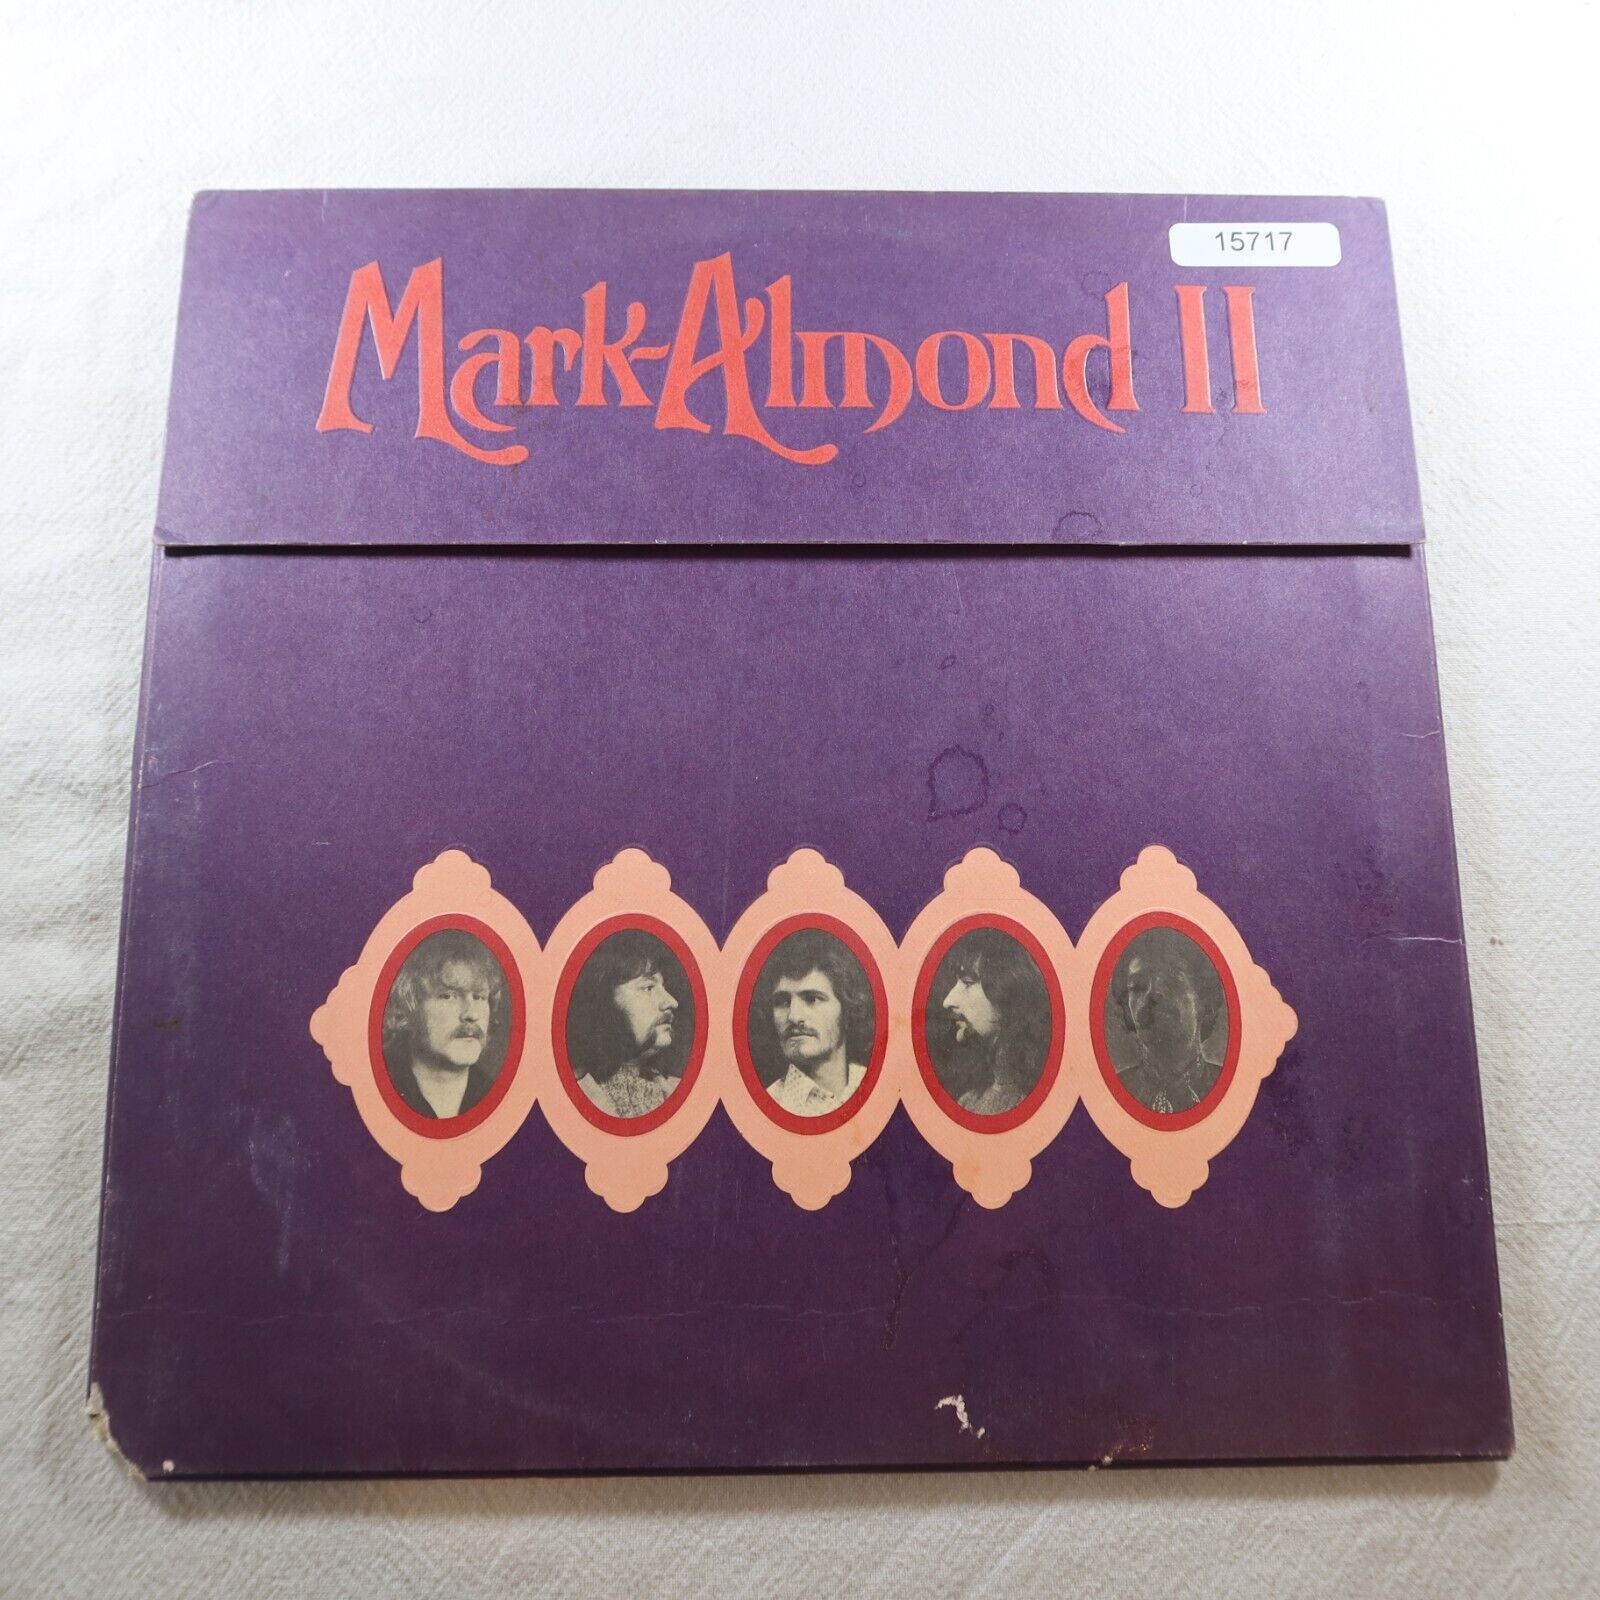 Mark Almond Ii Blue Thumb  Record Album Vinyl LP